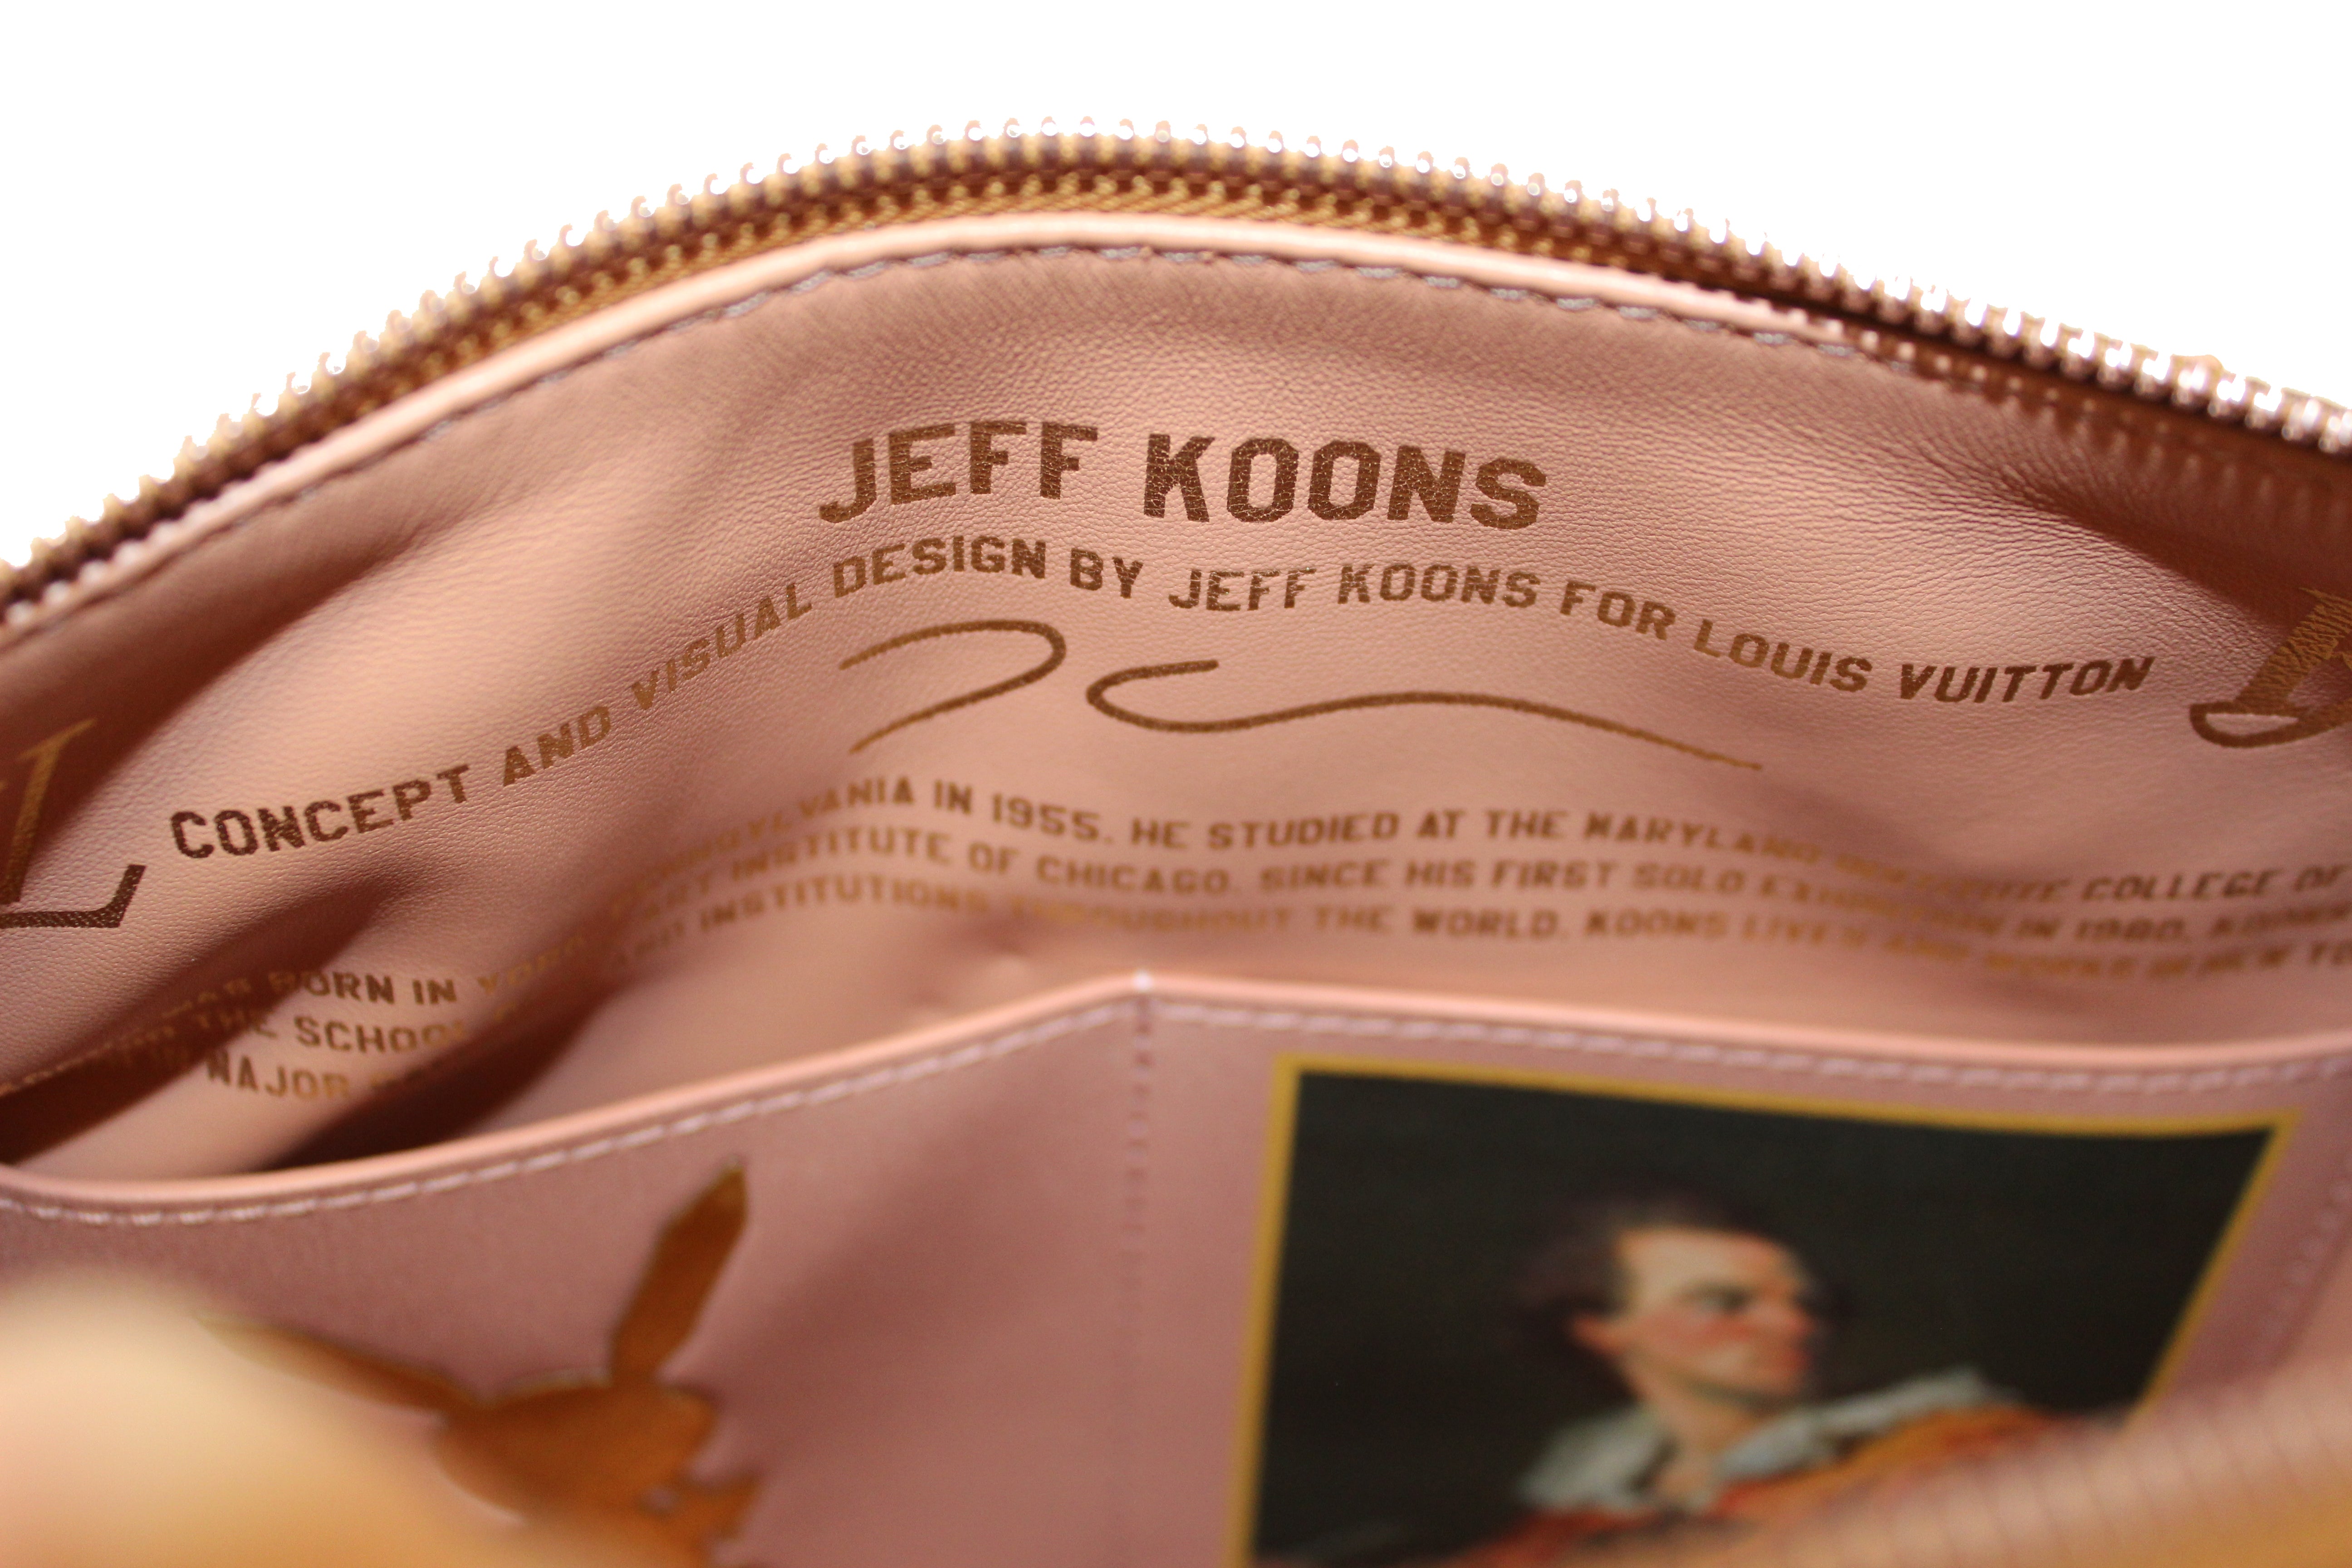 Louis Vuitton Limited Edition Masters Speedy 30 Jeff Koons Fragonard Bag